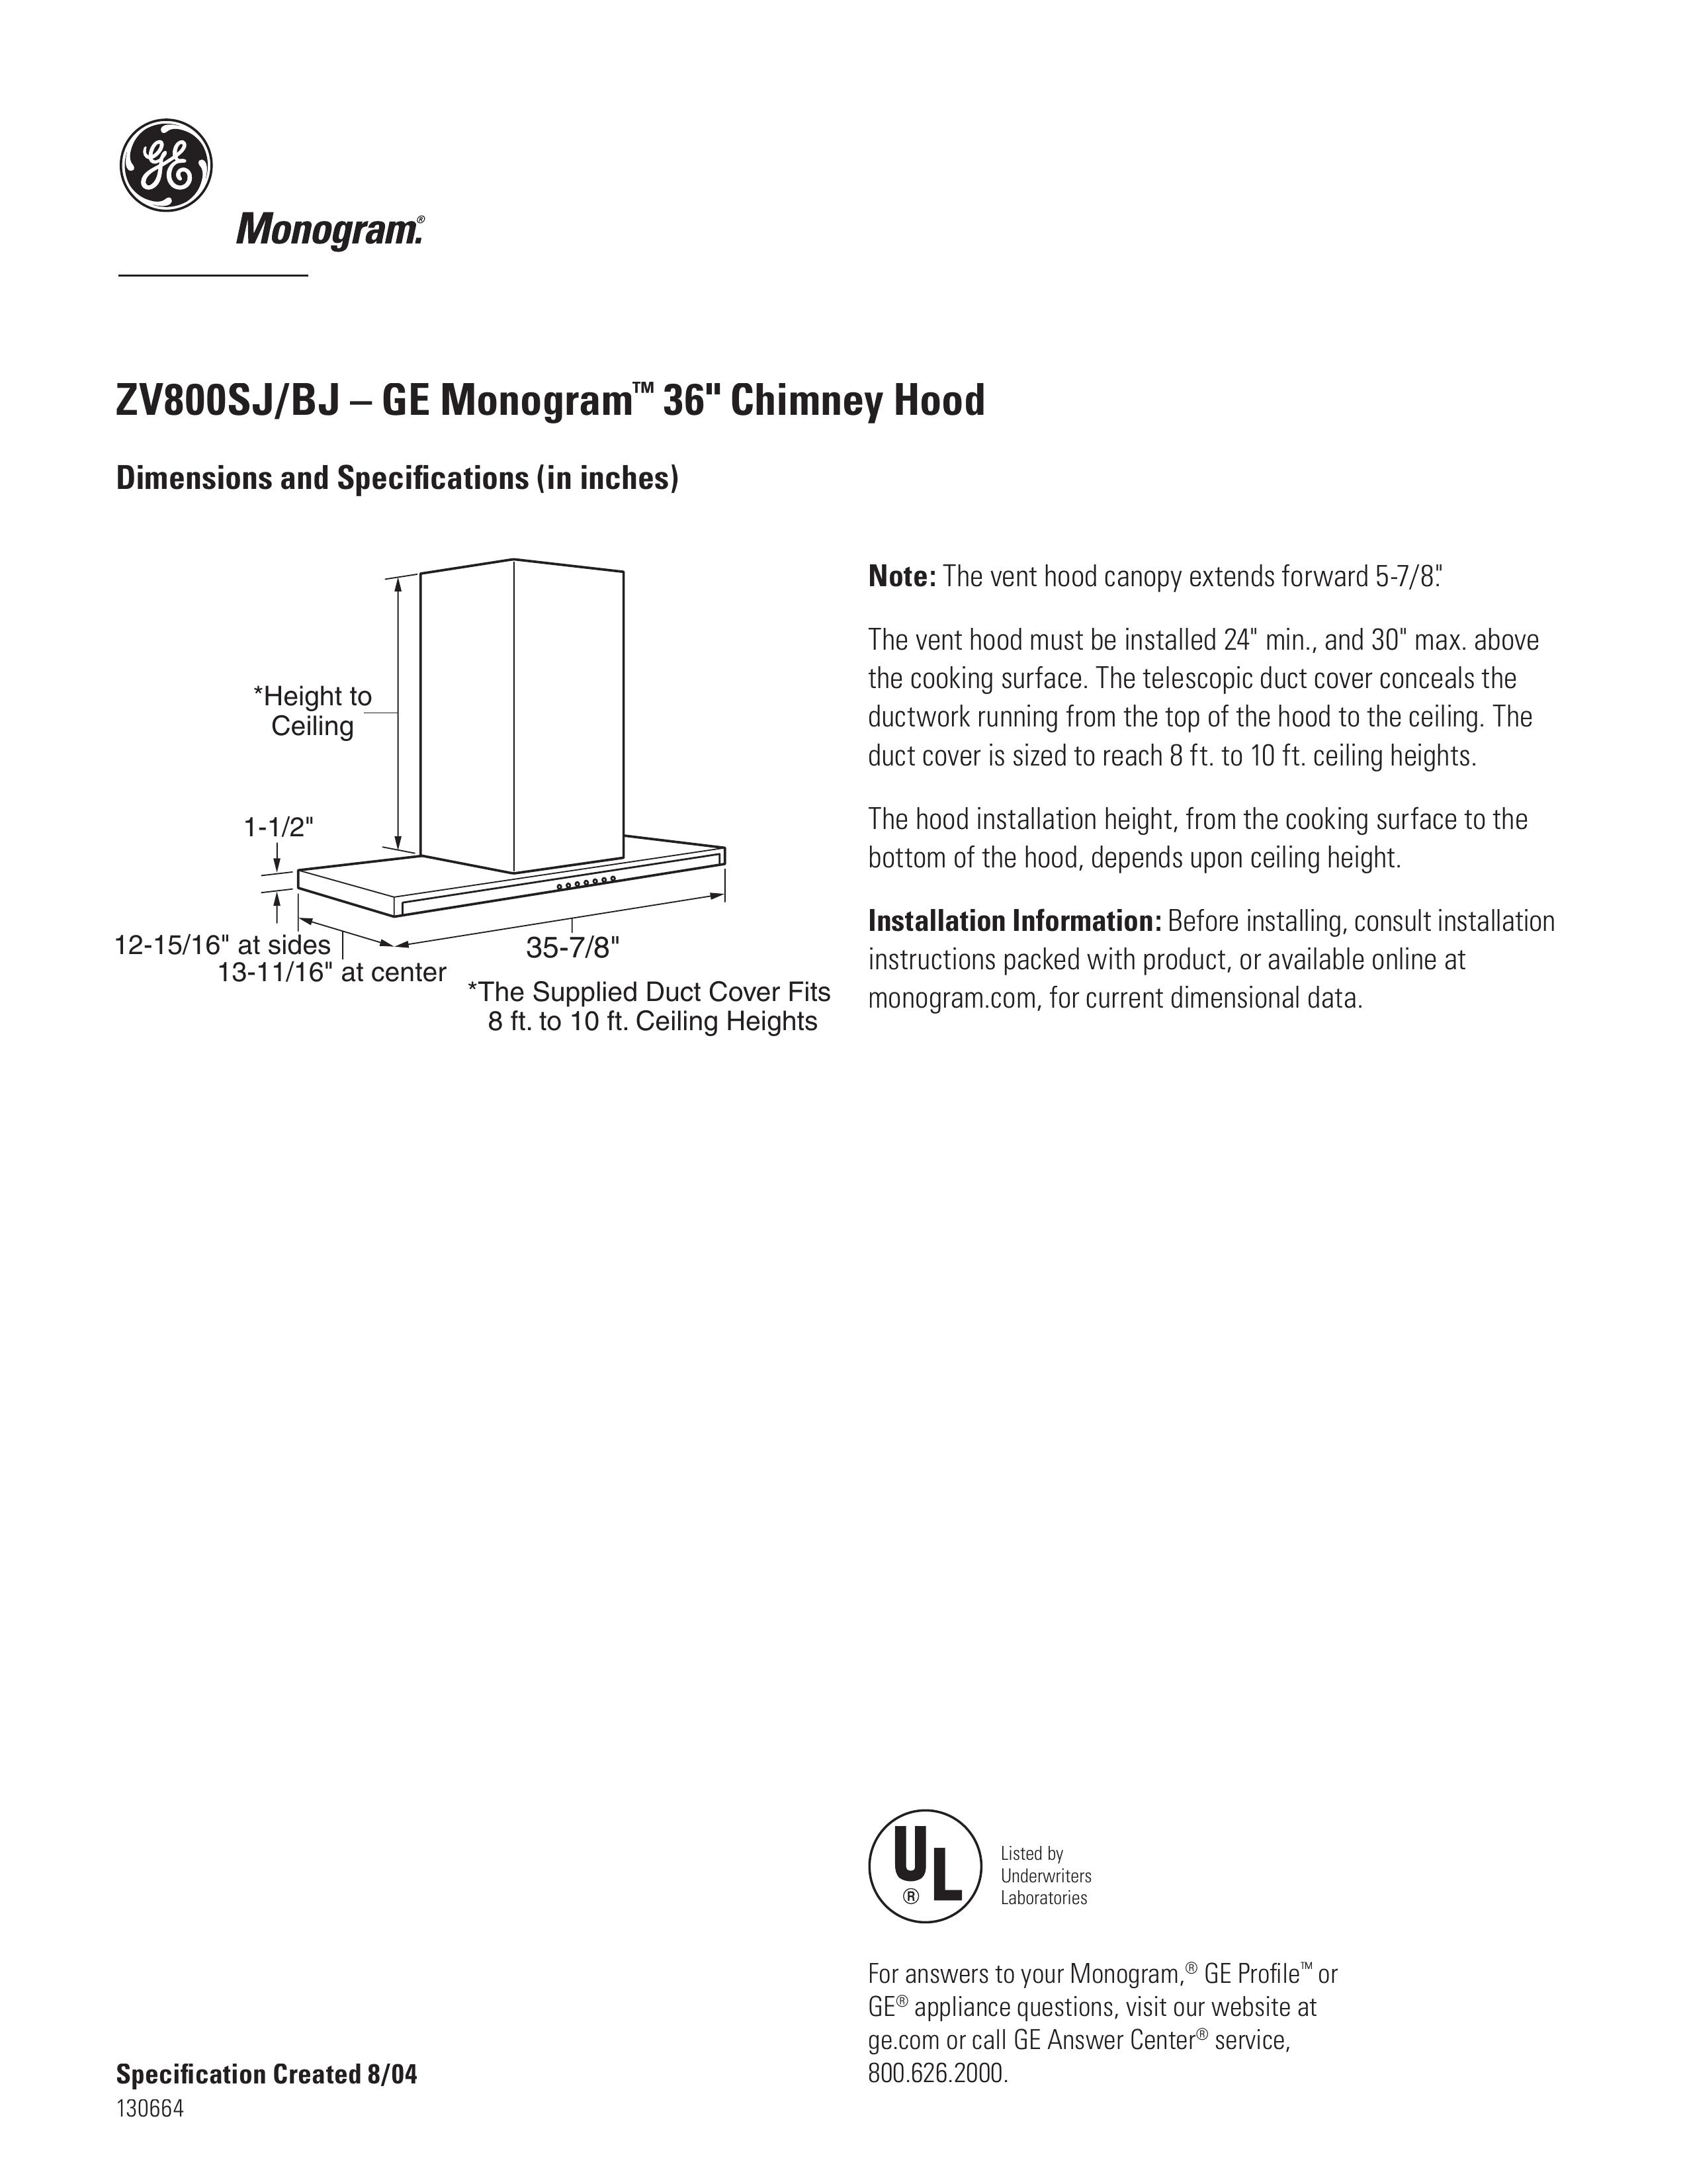 GE Monogram ZV800SJ Ventilation Hood User Manual